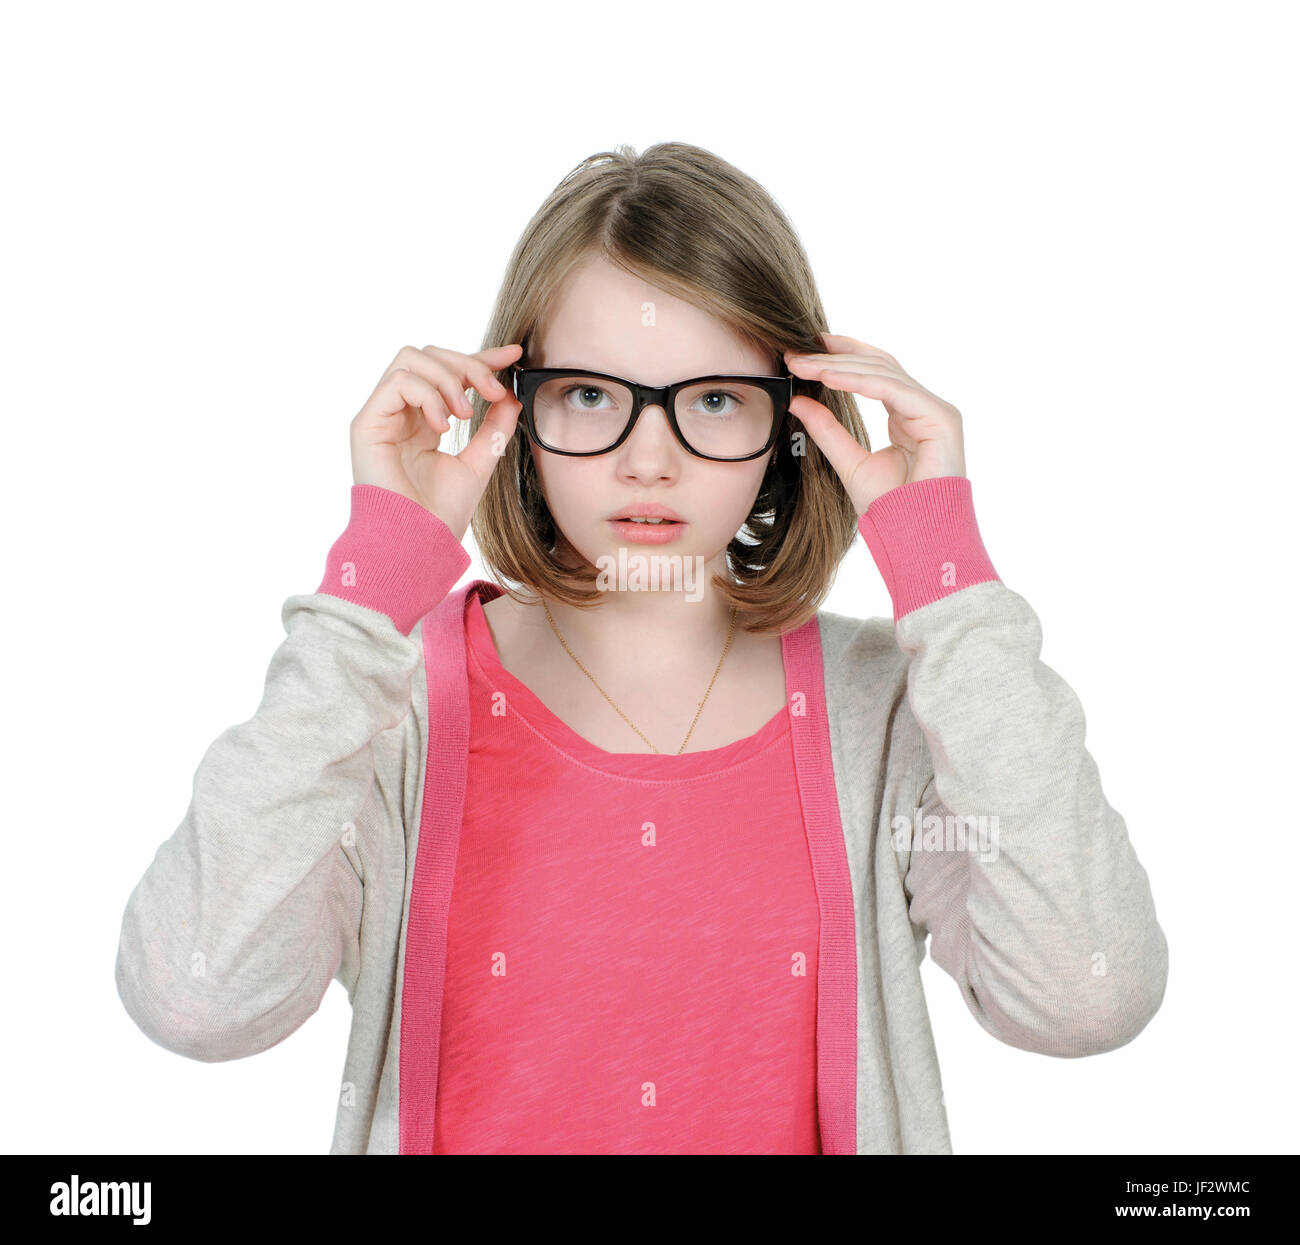 Linda usa gafas ver Fotografía stock - Alamy